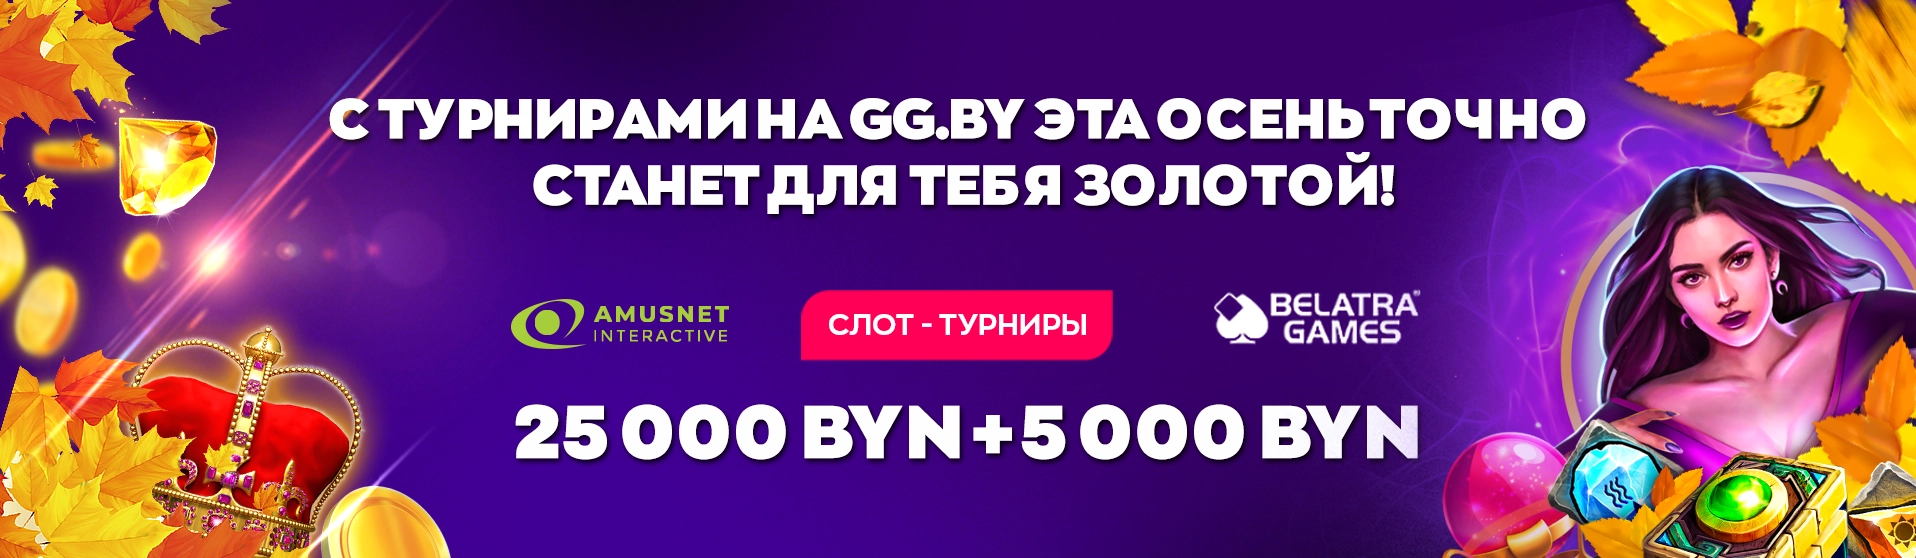 Золотая пора на GG.BY: подключайся к слот-турнирам с общим банком в 30 000 BYN!